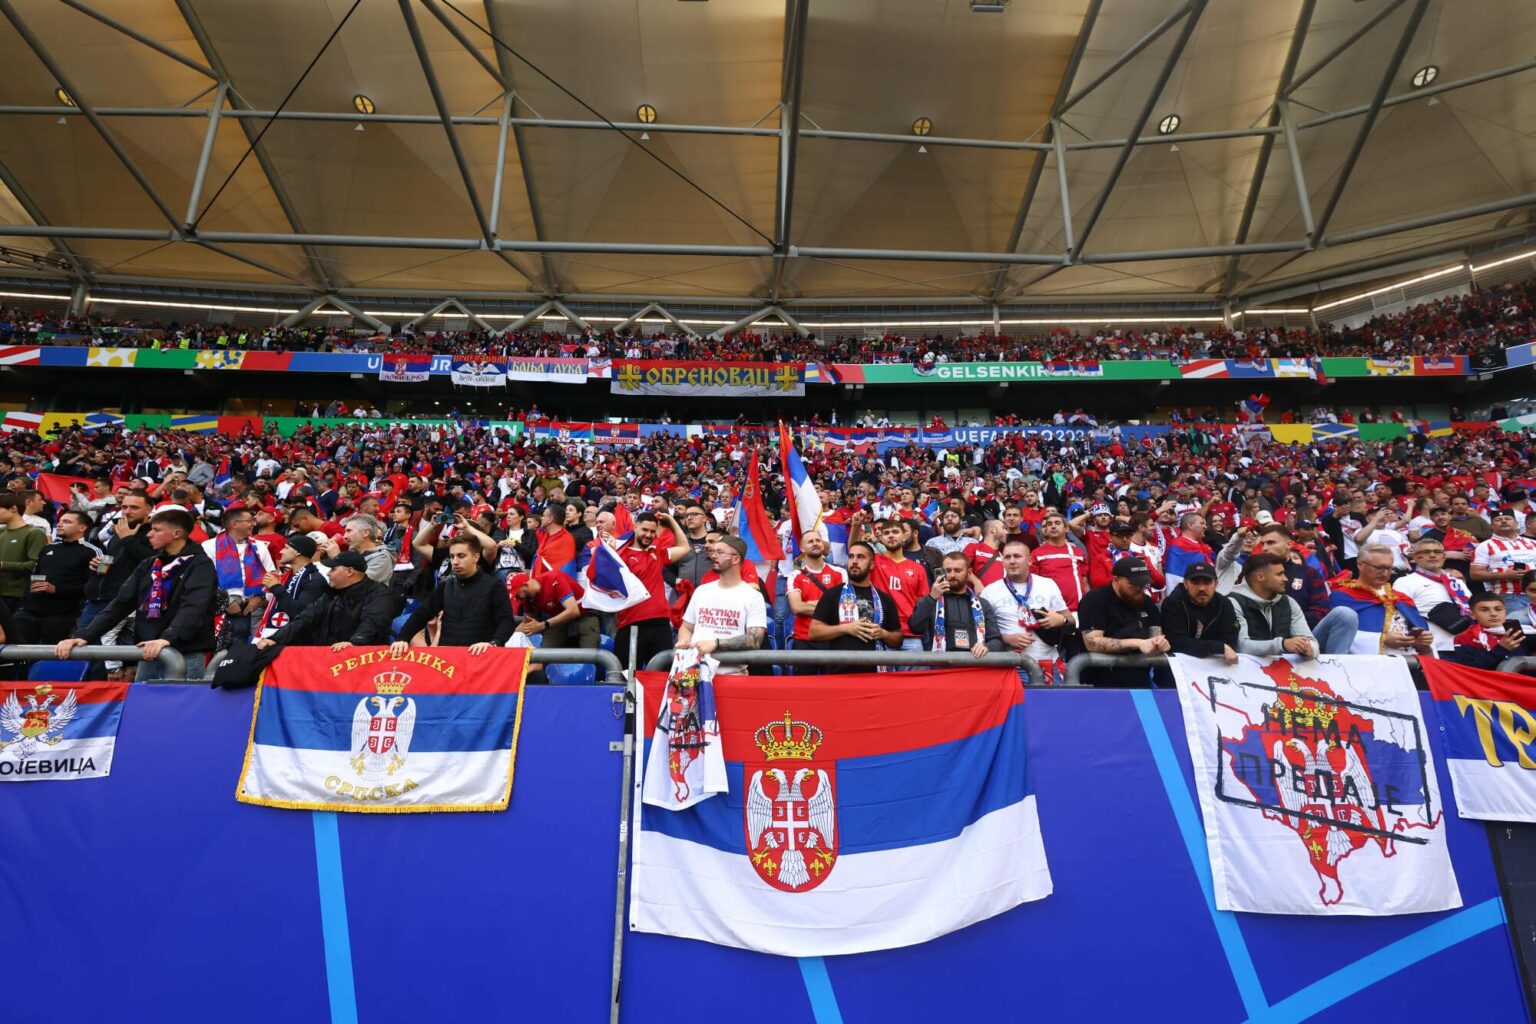 Mesazhe politike kundër Kosovës, UEFA hap hetimin ndaj Serbisë